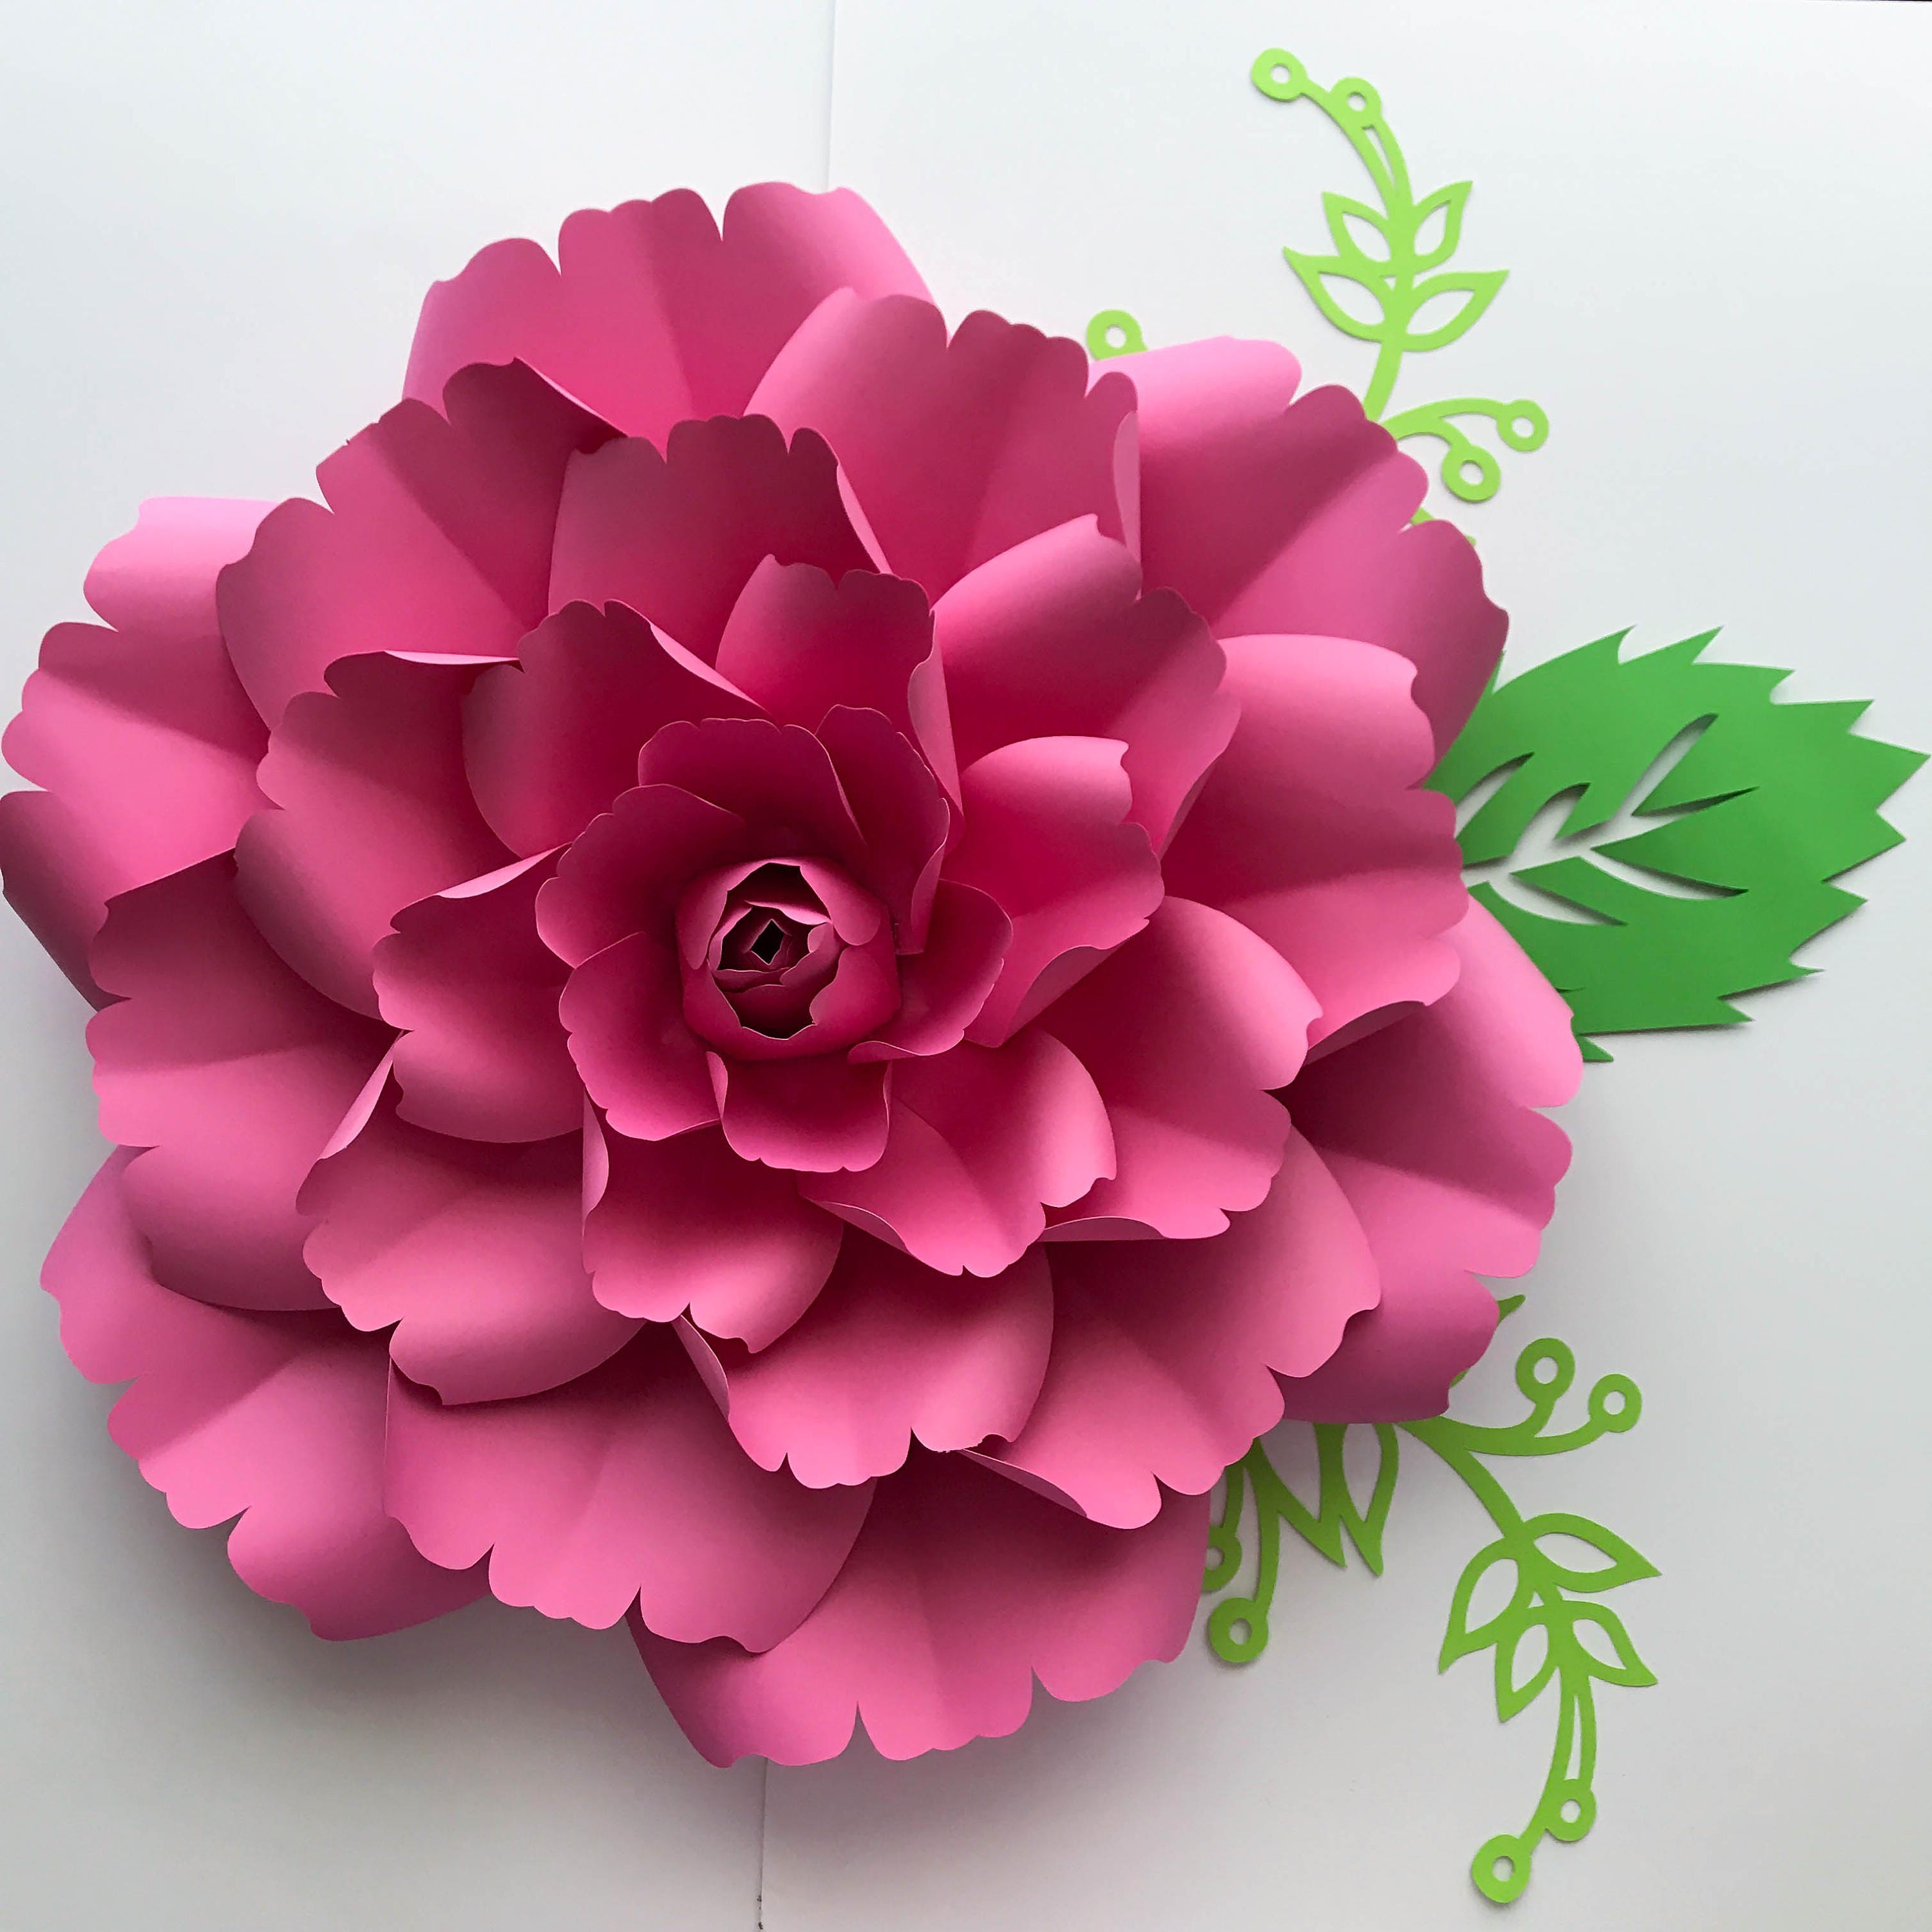 SVG Petal 137 Paper Flower template with Center Digital